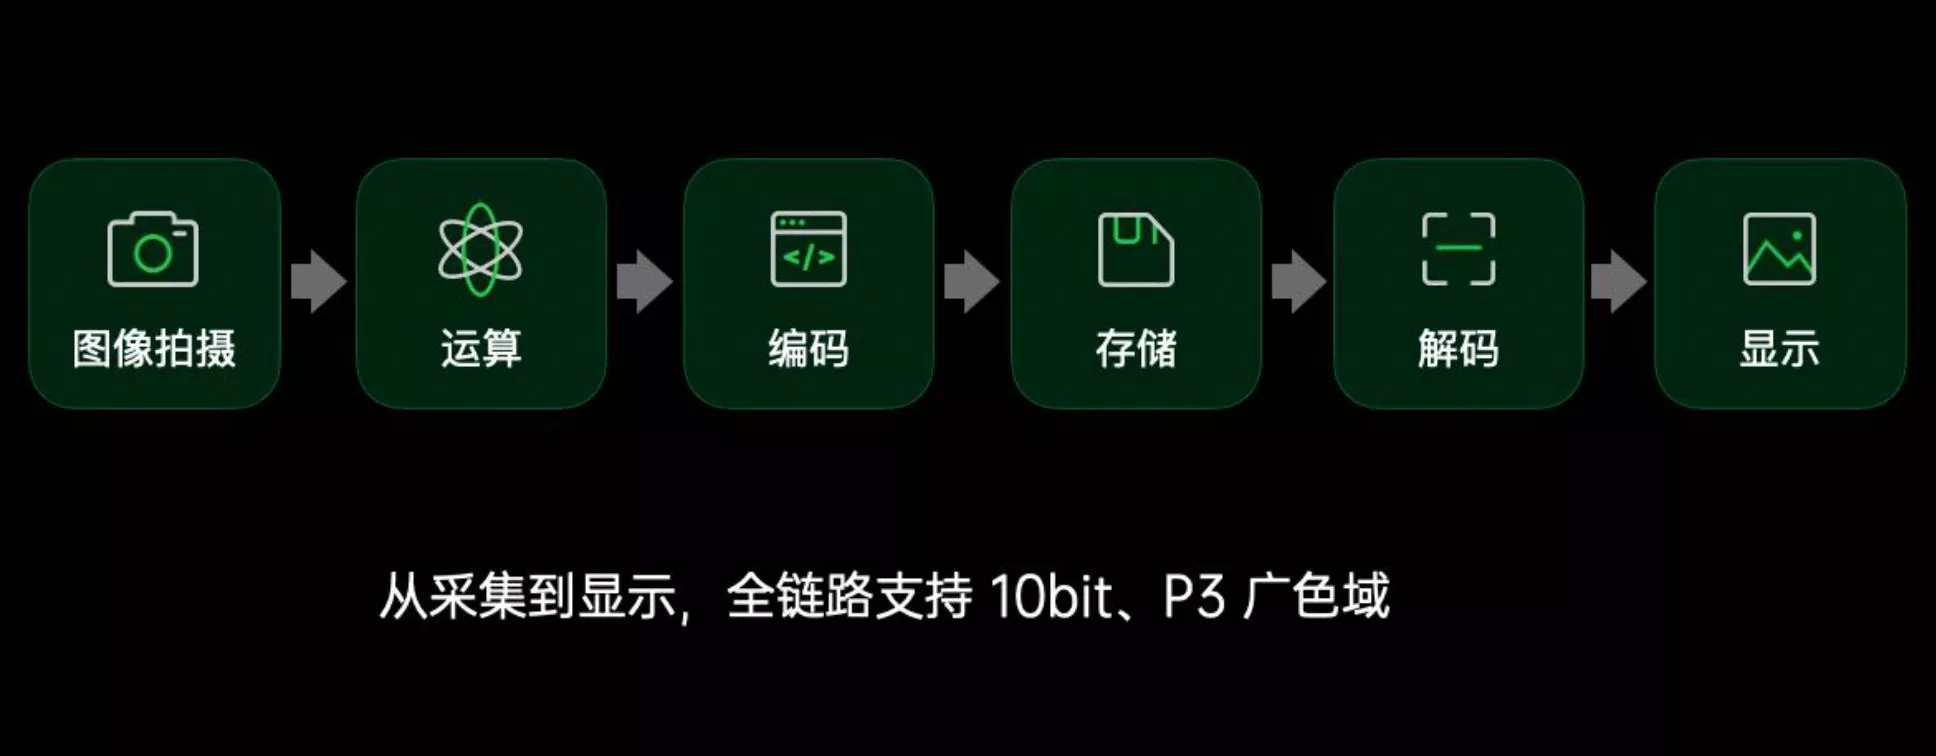 OPPO Full-path 10bit color